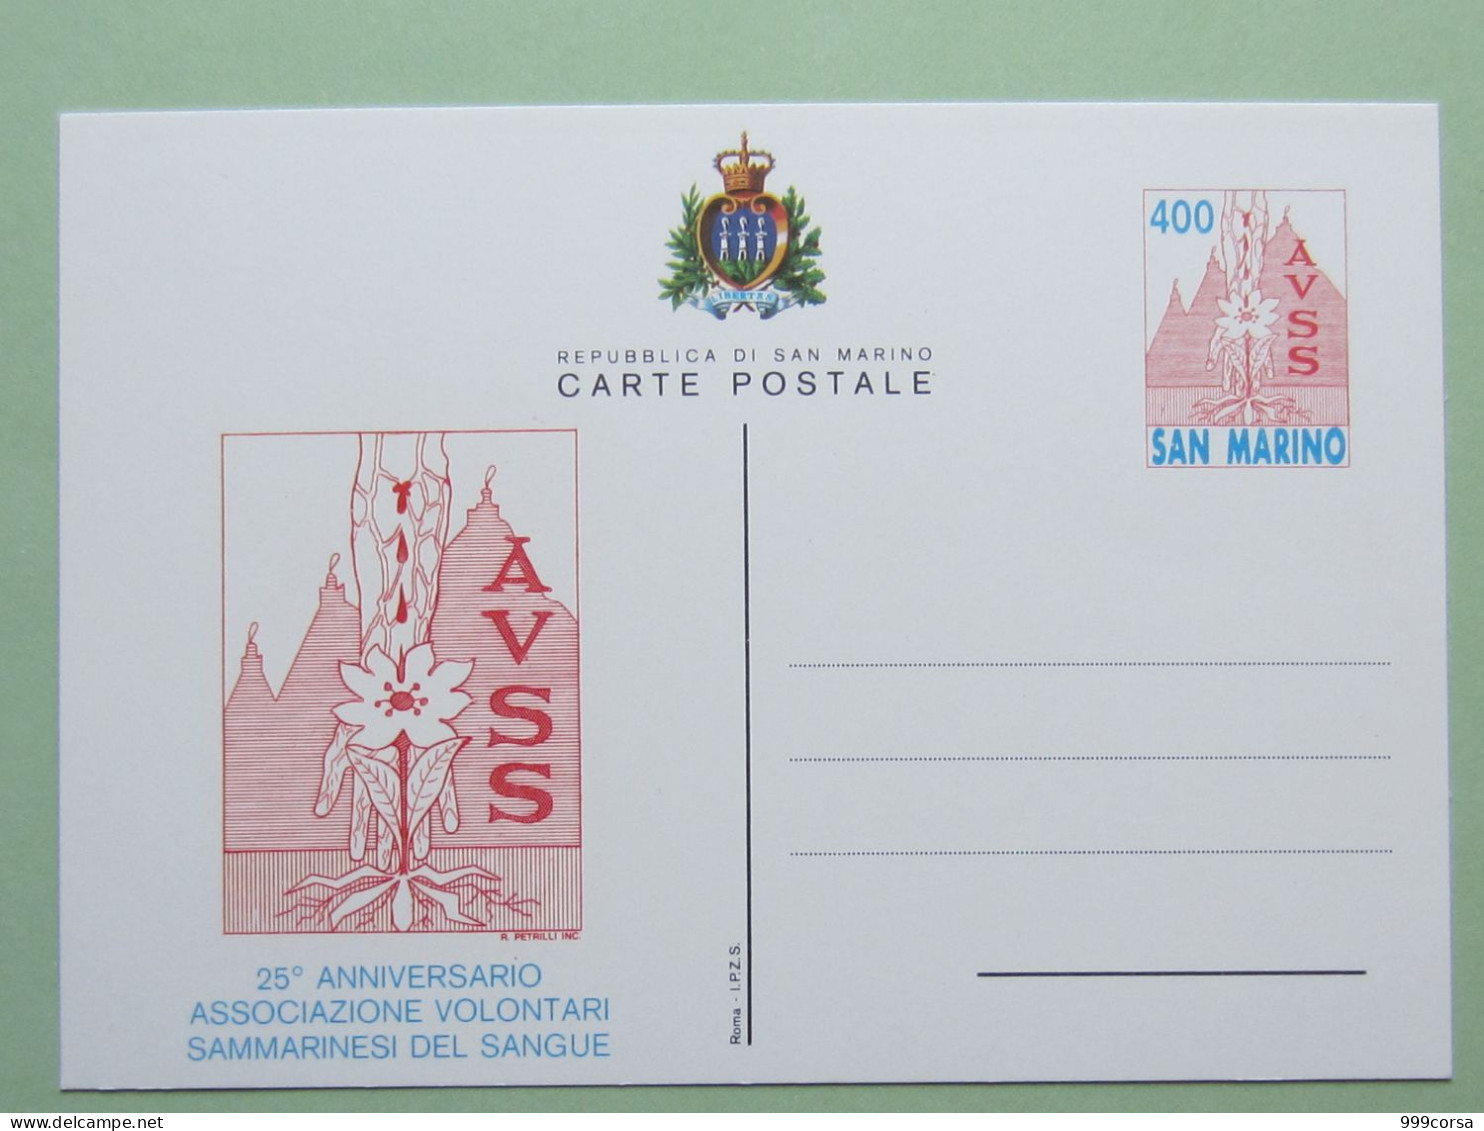 San Marino,lotto Interi Postali (busta Asiago Arte Filatelica,cart.post.Alfa Romeo 75°ann.,aerogramma Olimphilex 1985,ec - Enteros Postales